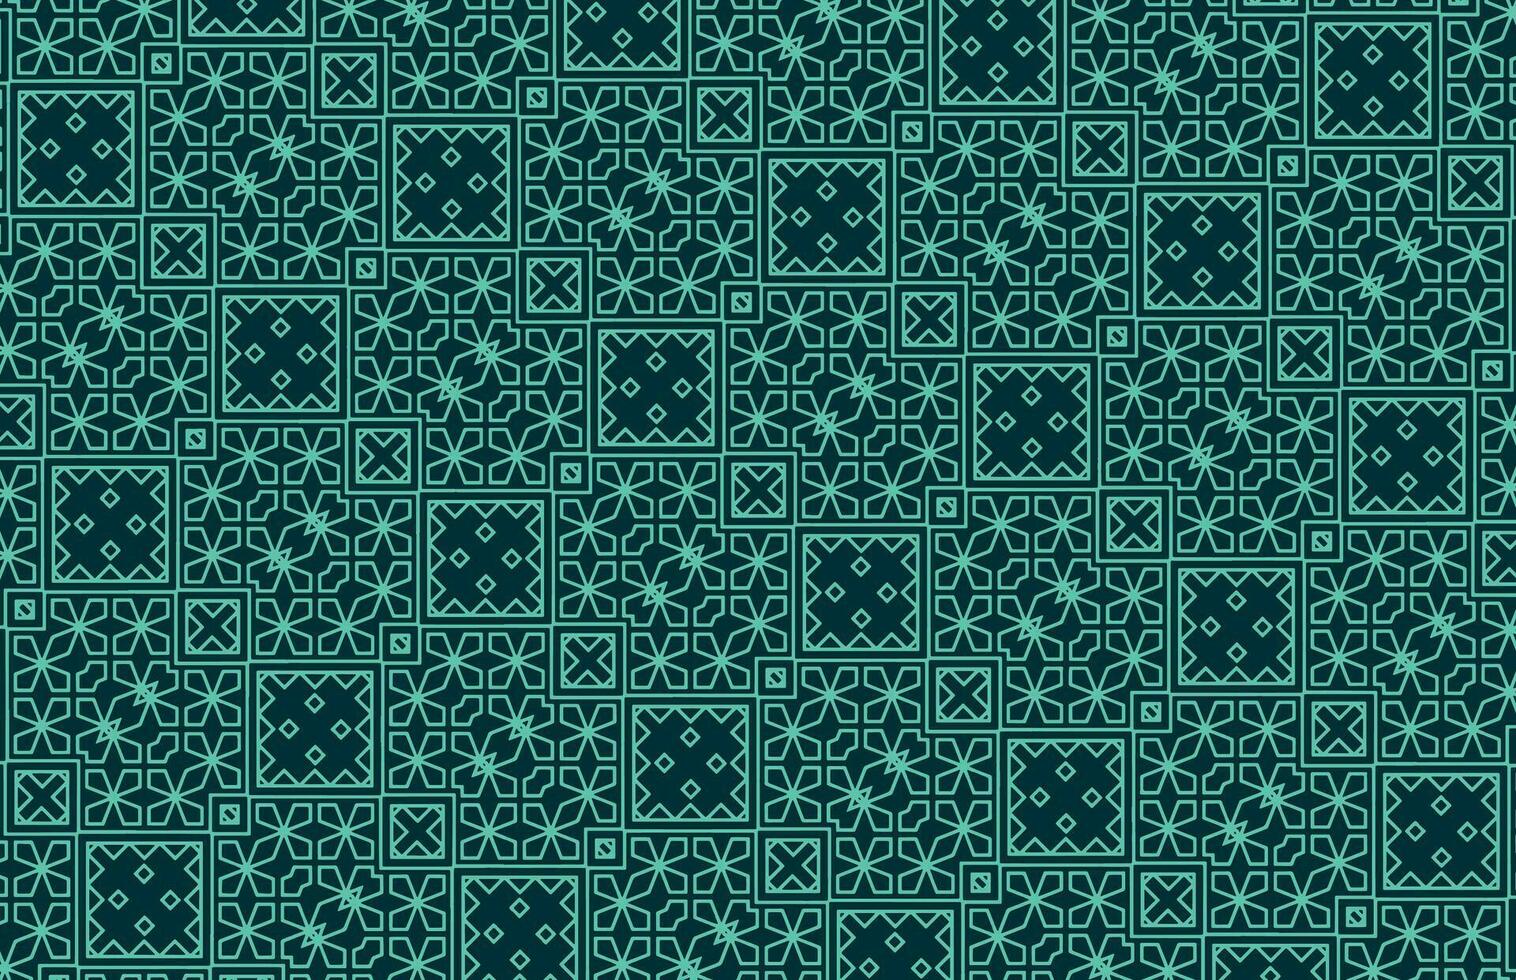 arabicum geometrisk blå tyg mönster vektor